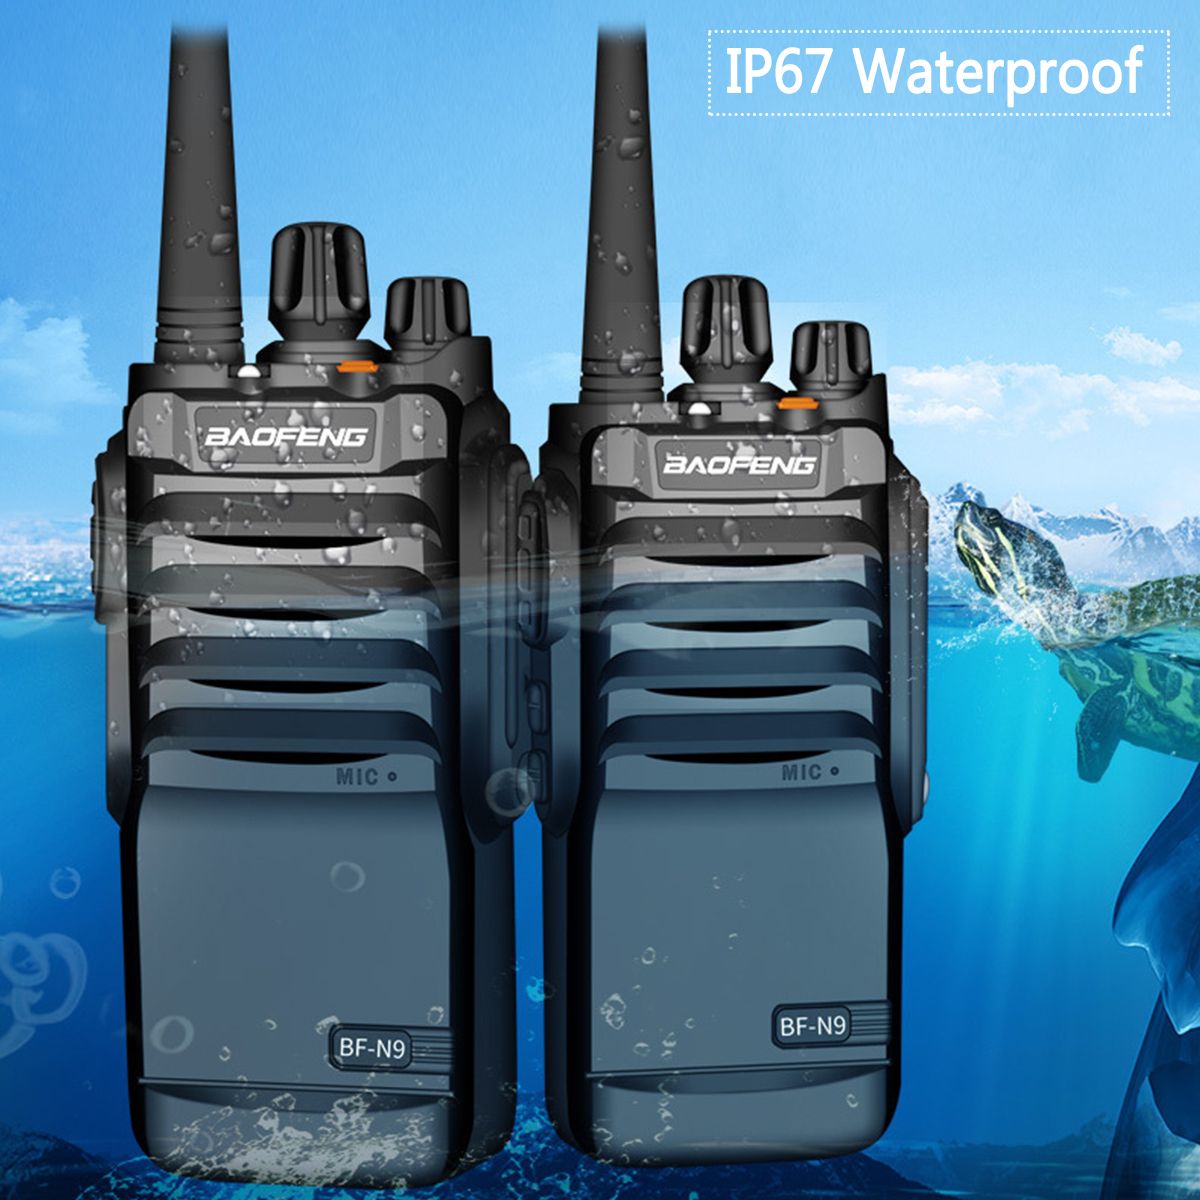 Baofeng-BF-N9-8W-IP67-Waterproof-Walkie-Talkie-FM-Radio-UHF-400-520MHz-Two-Way-Radio-15KM-Communicat-1420913